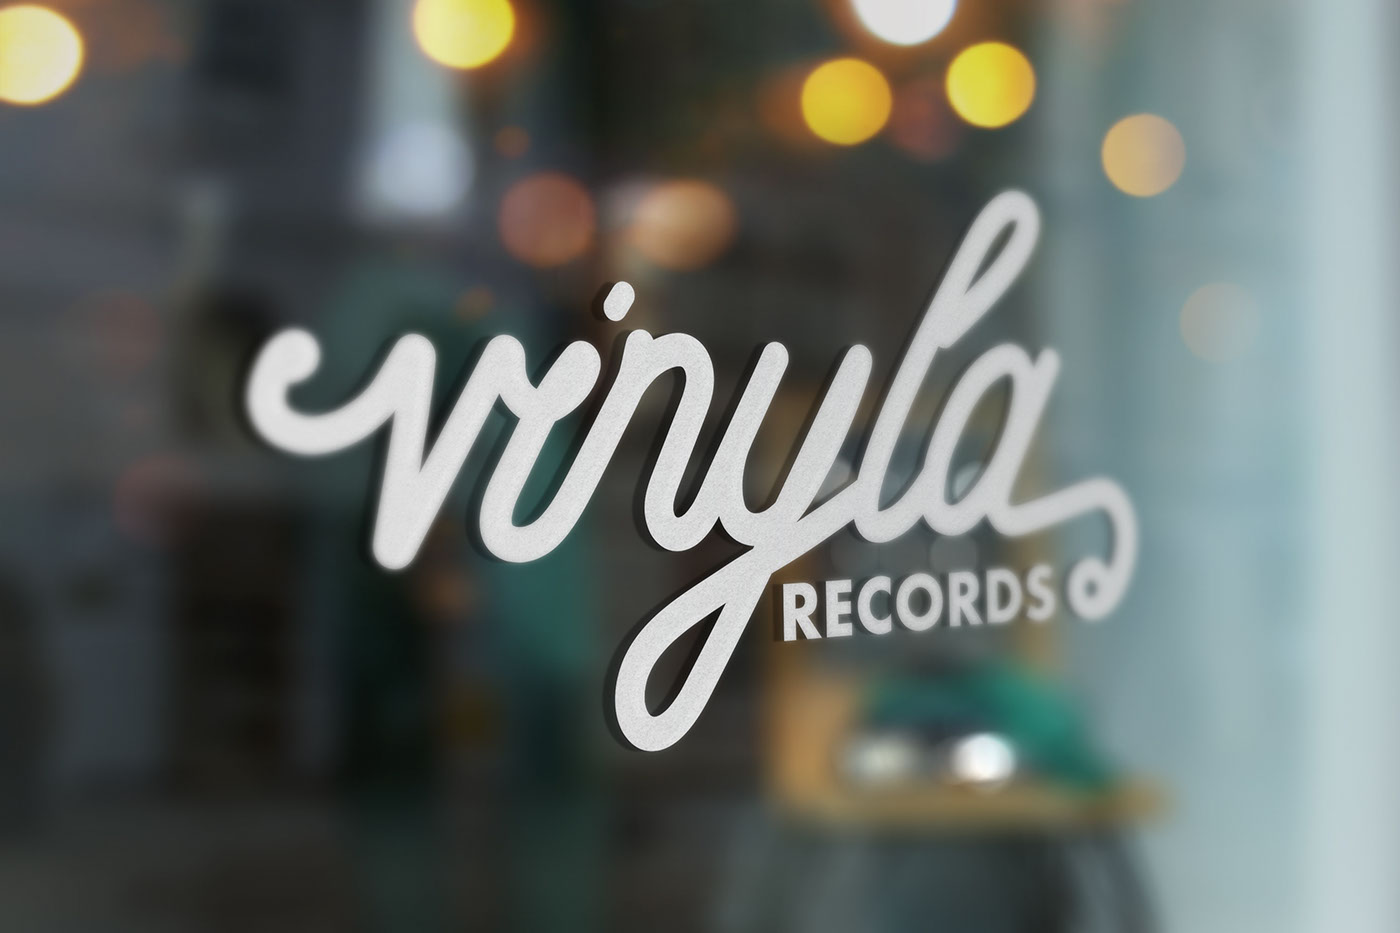 Records vinyl Vinyla branding  caligraphy monoline Merch shop vintage